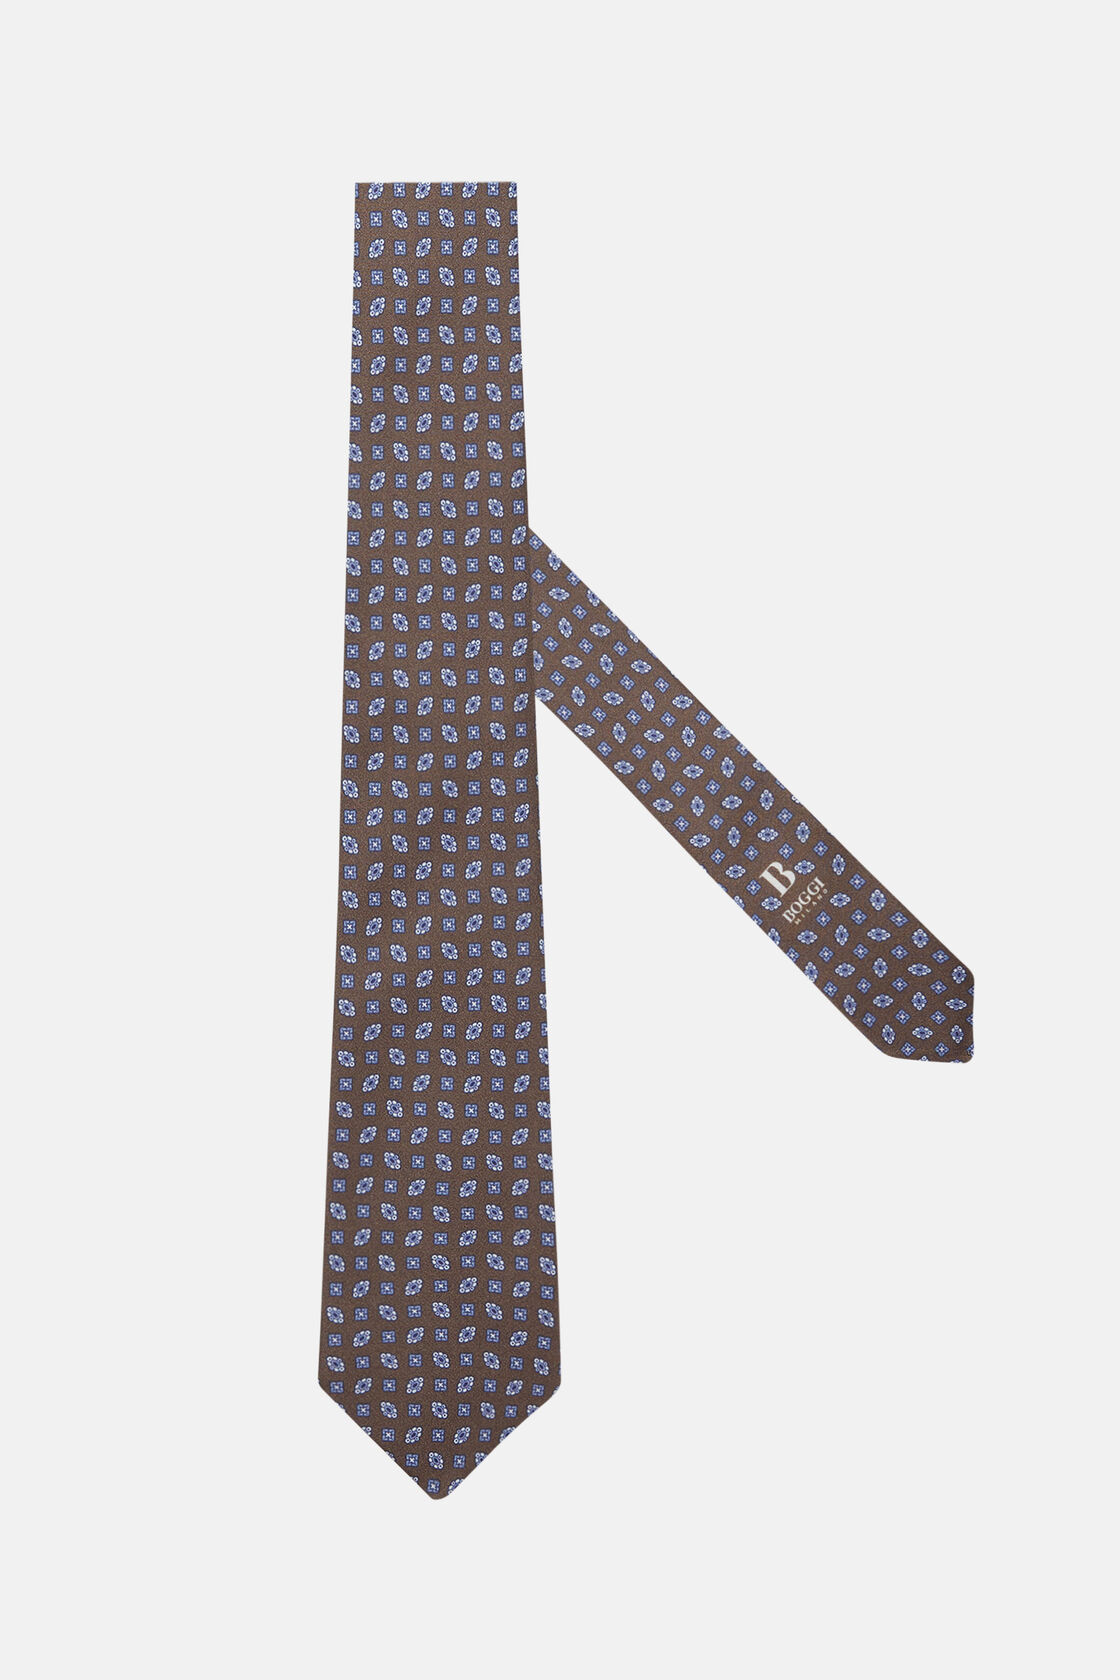 Corbata Motivo Geométrico De Seda, marrón, hi-res